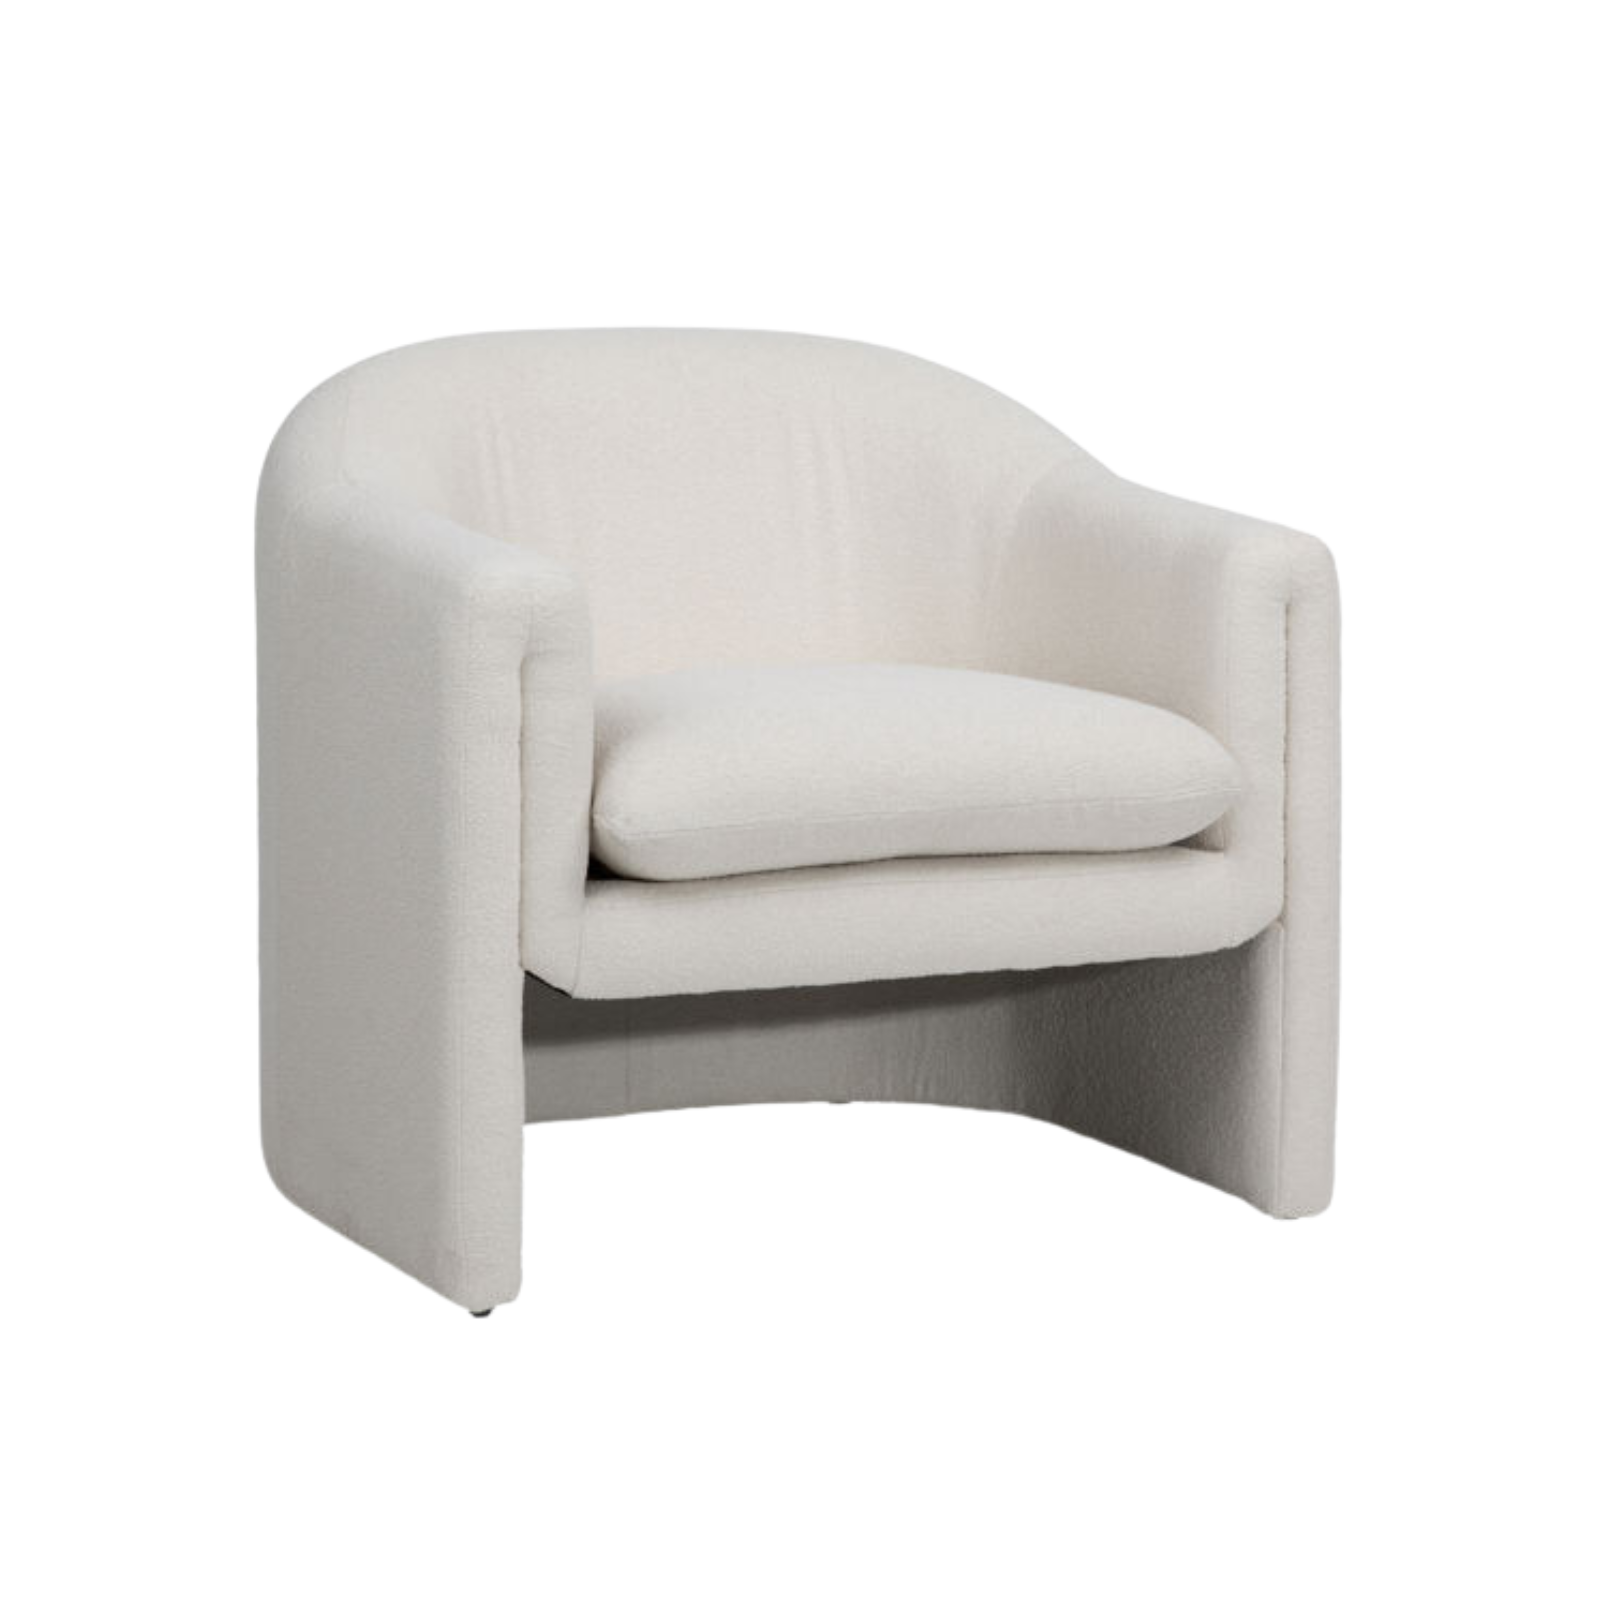 Aldo Occasional Chair - Ivory